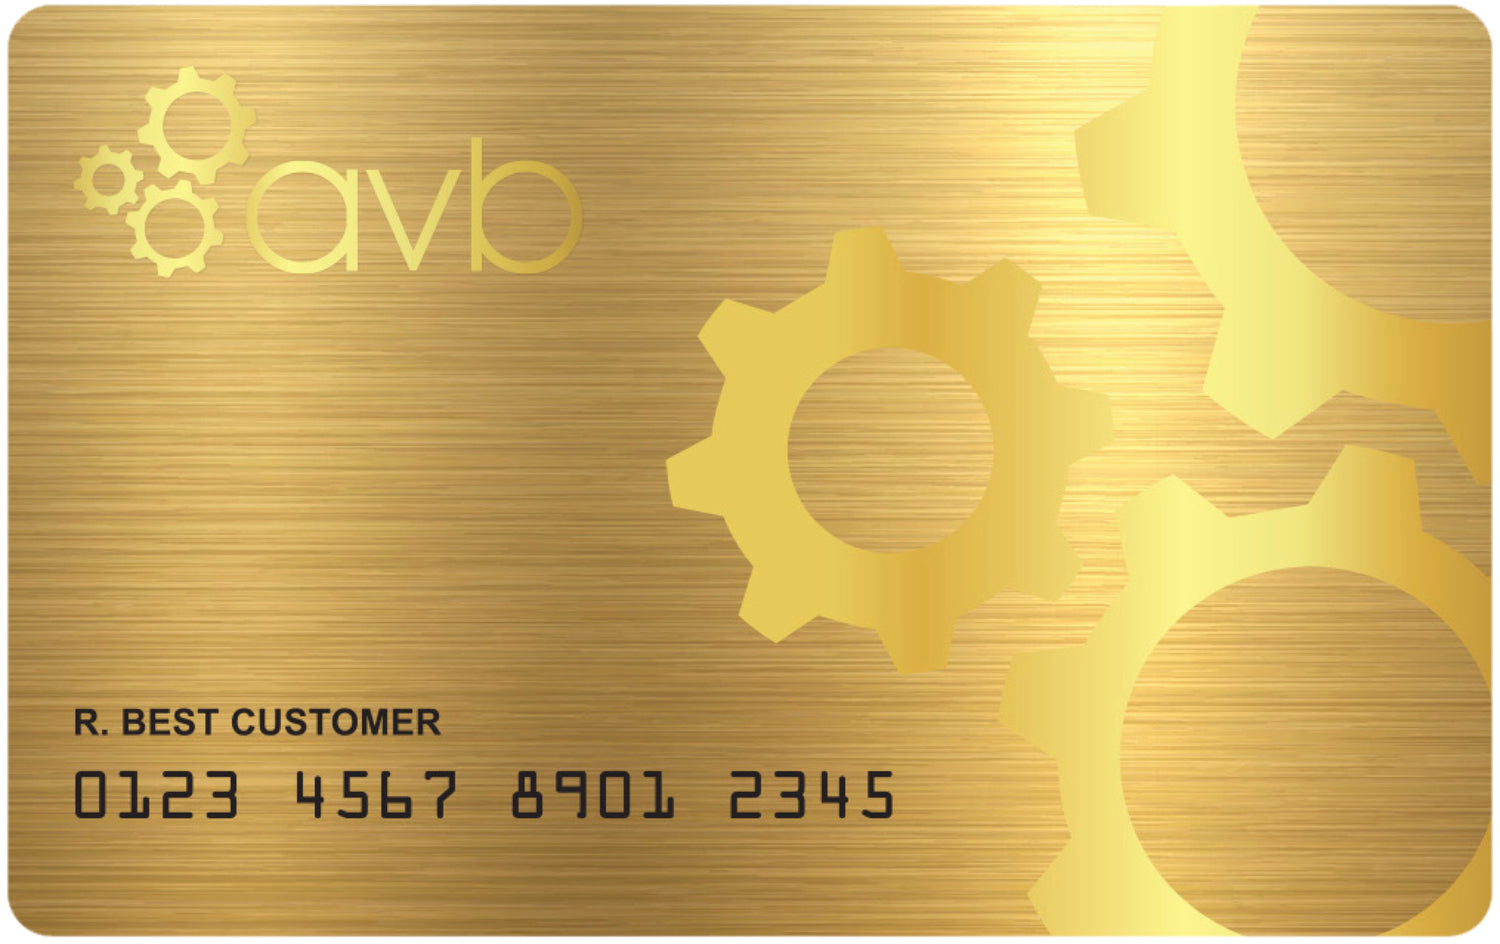 AVB Credit Card